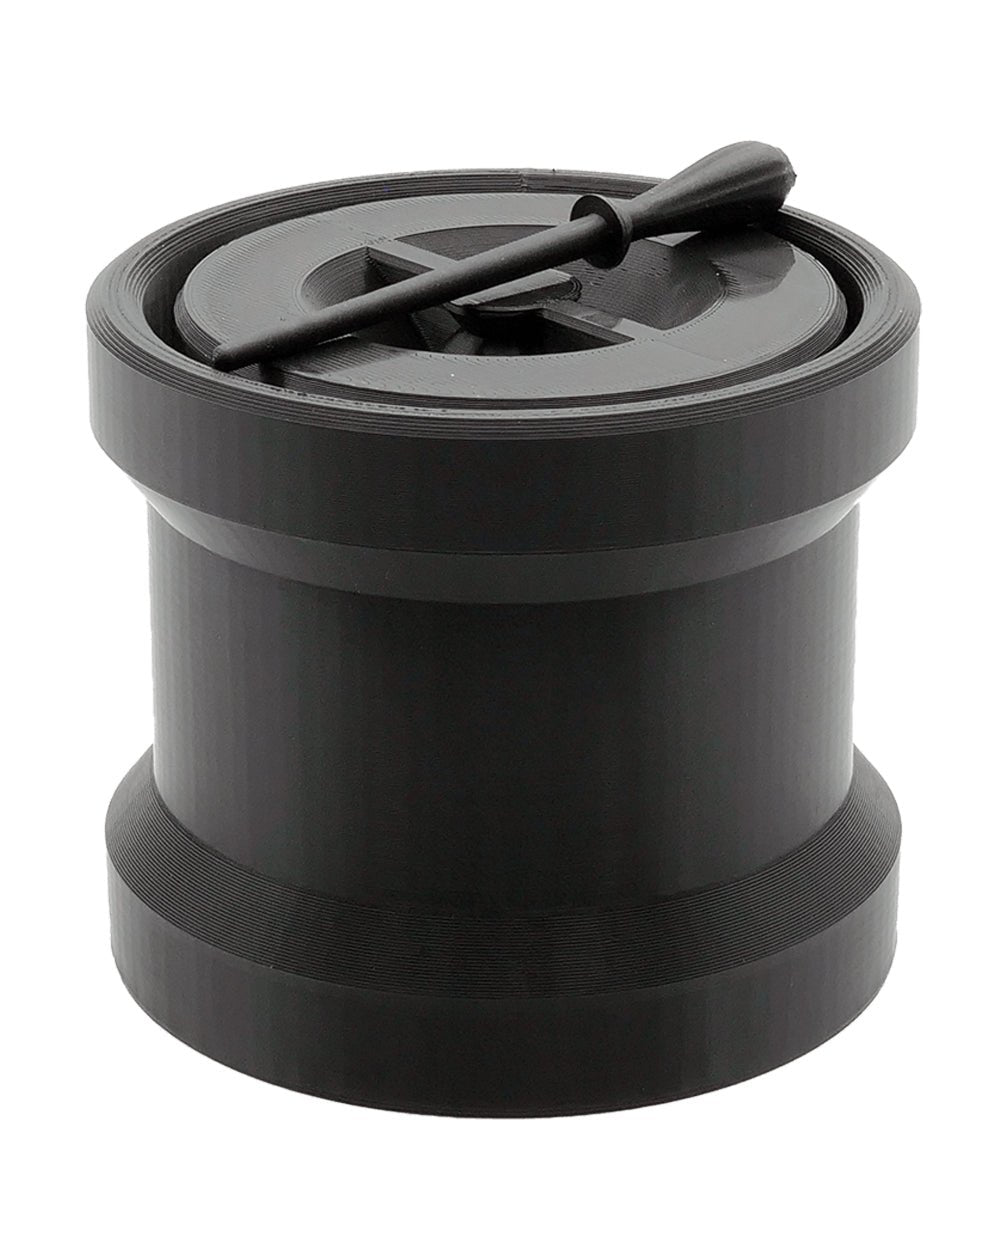 HUMBOLDT | Black Pre-Rolled Cones Filling Machine Cartridge 84mm | Fill 55 Cones Per Run - 2